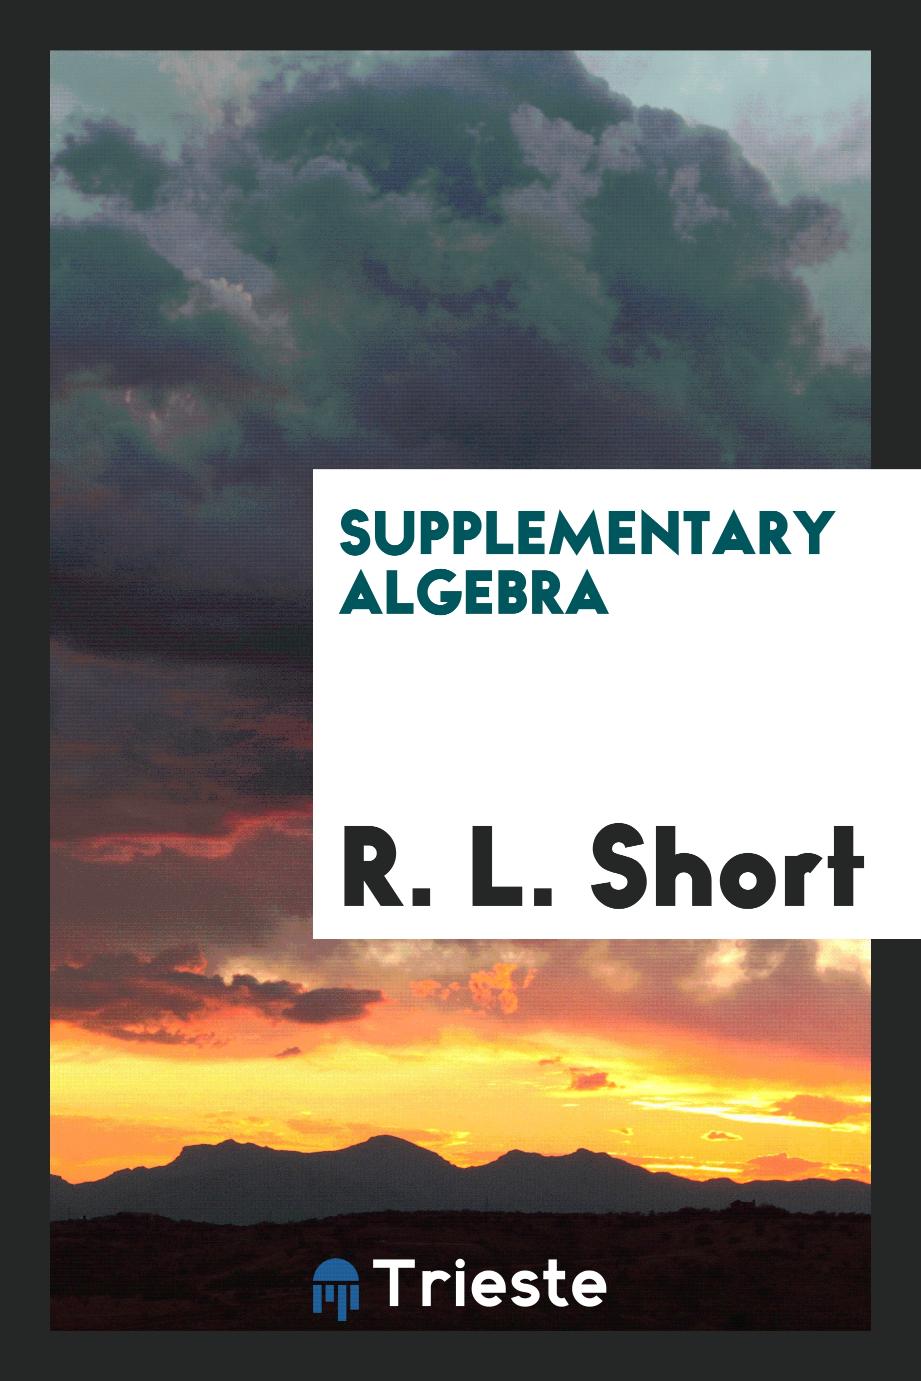 Supplementary algebra